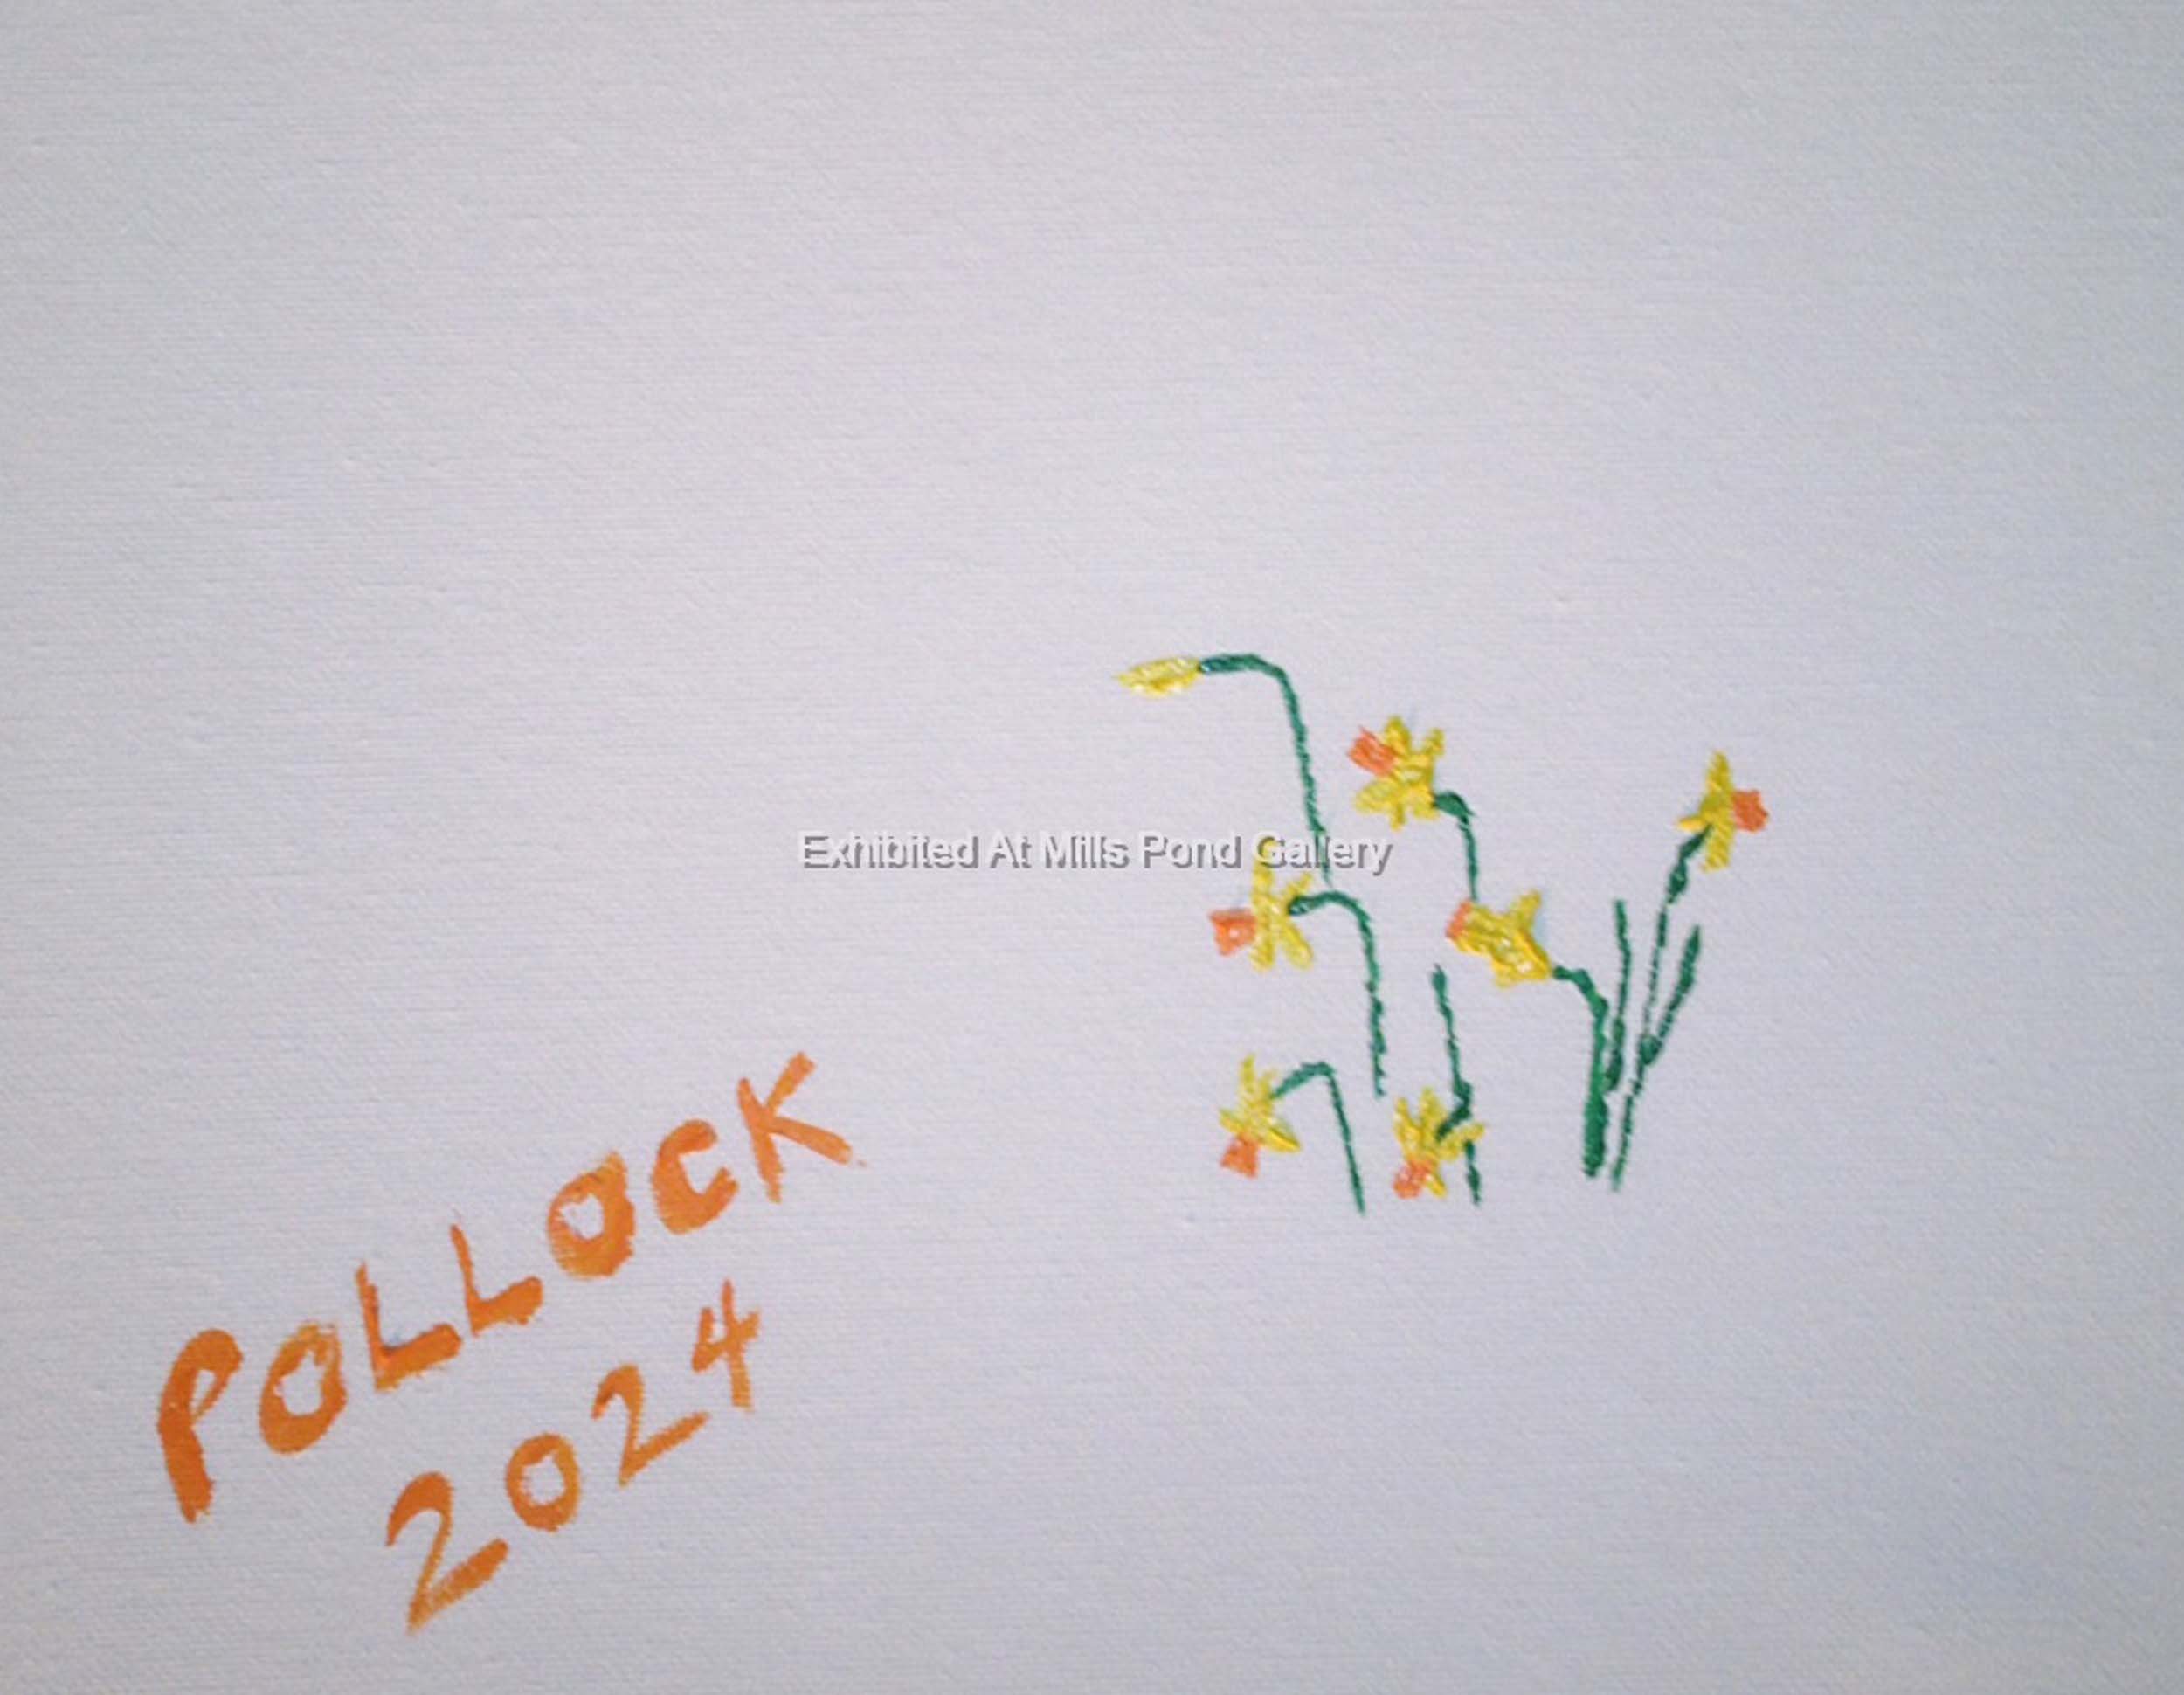 Sean Pollack-Daffodils in Bloom.jpg